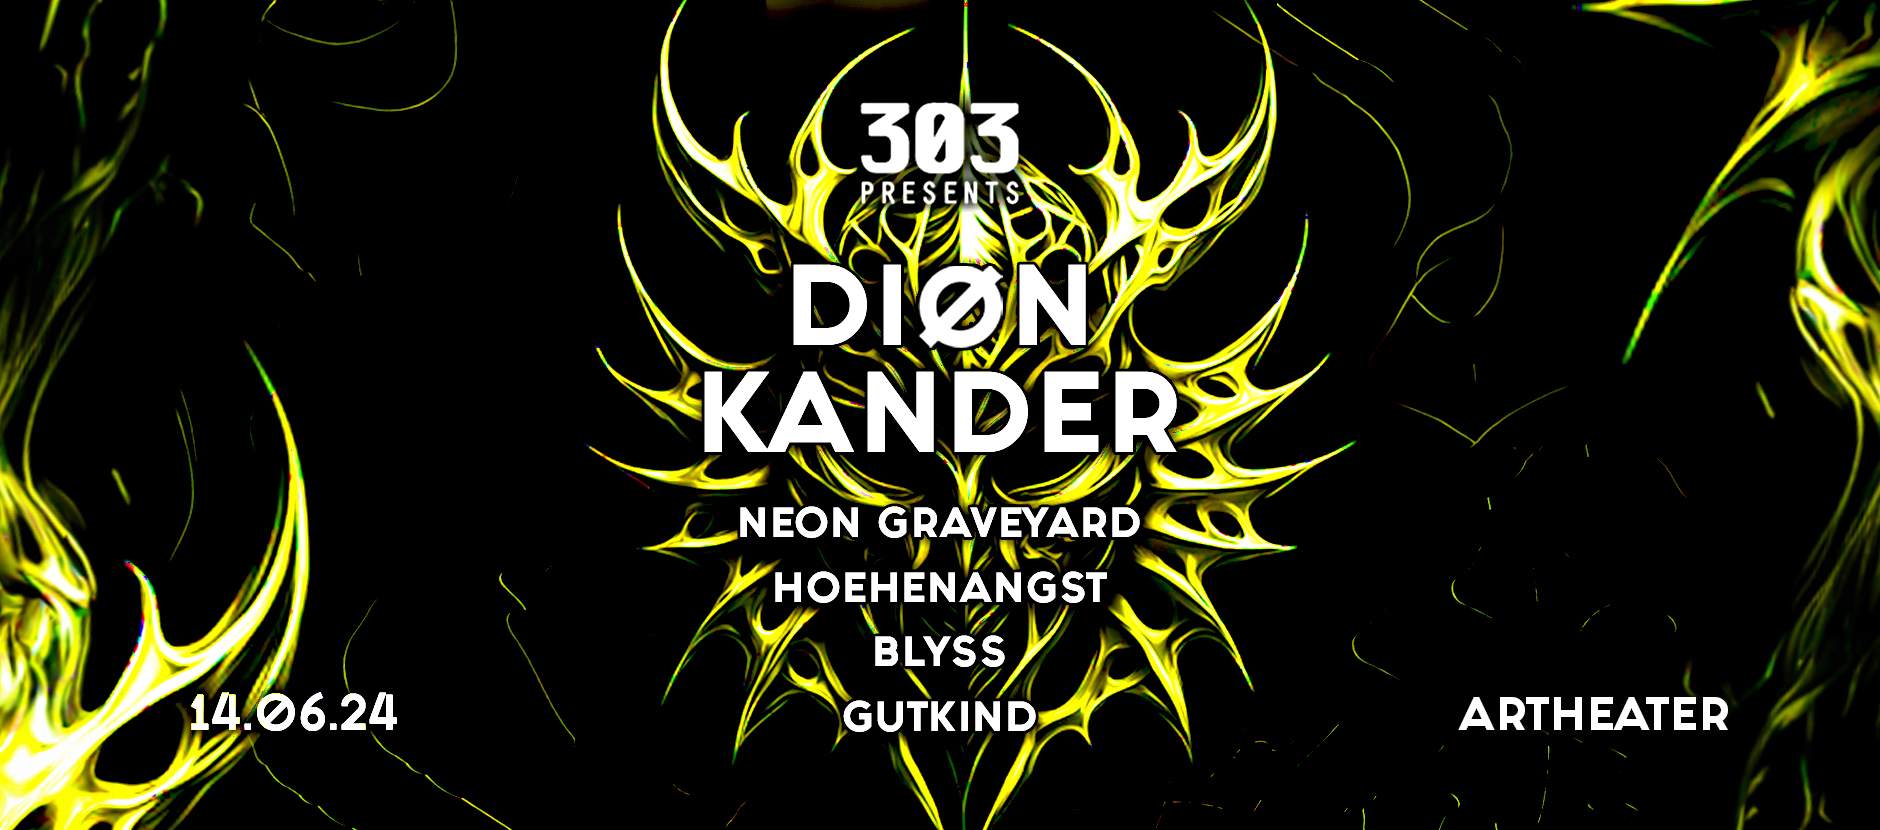 303 pres. DIØN, Kander, Neon Graveyard - Página frontal